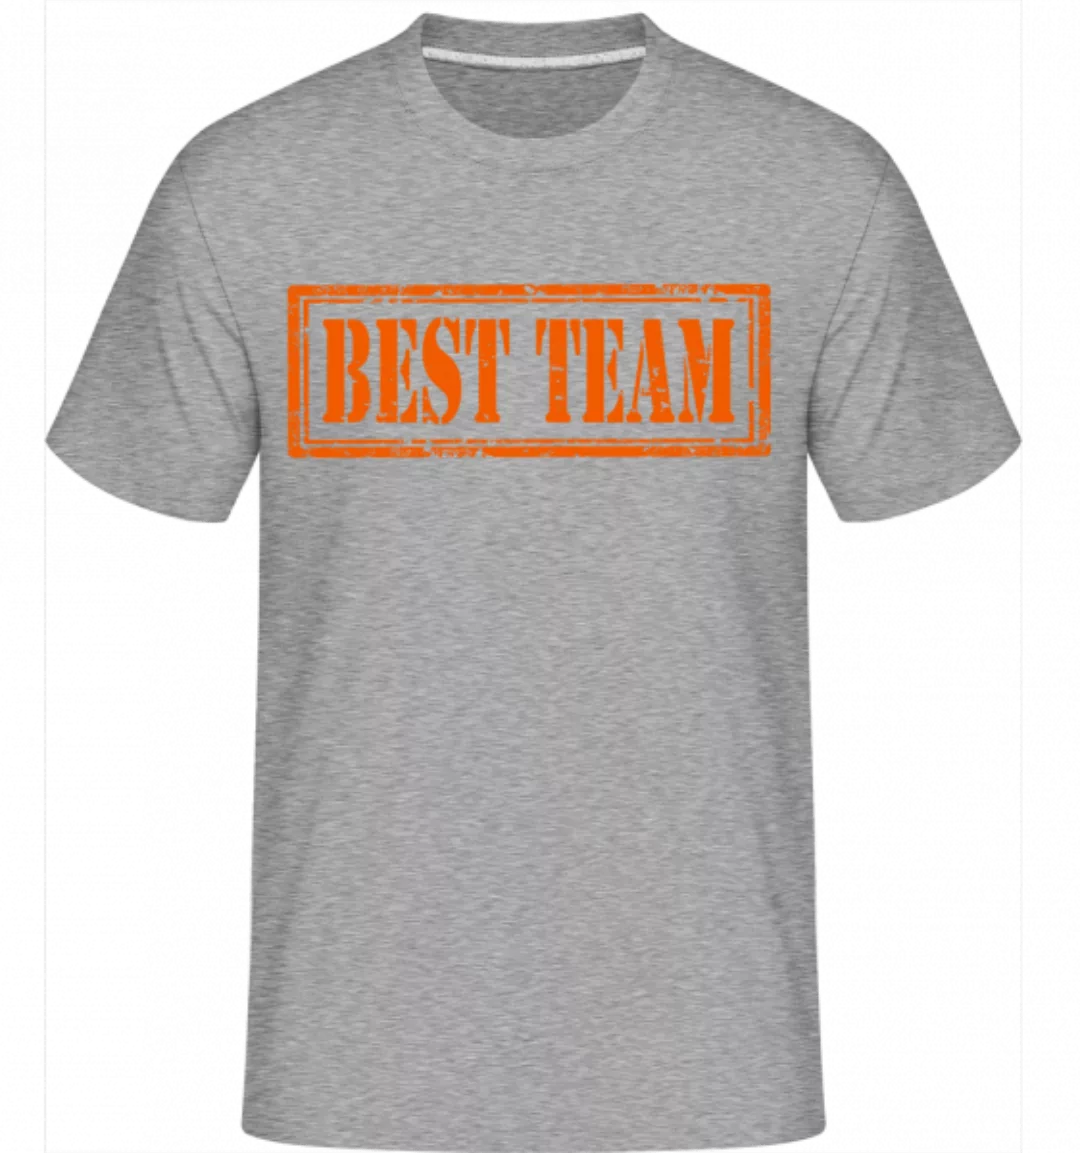 Best Team Sign · Shirtinator Männer T-Shirt günstig online kaufen